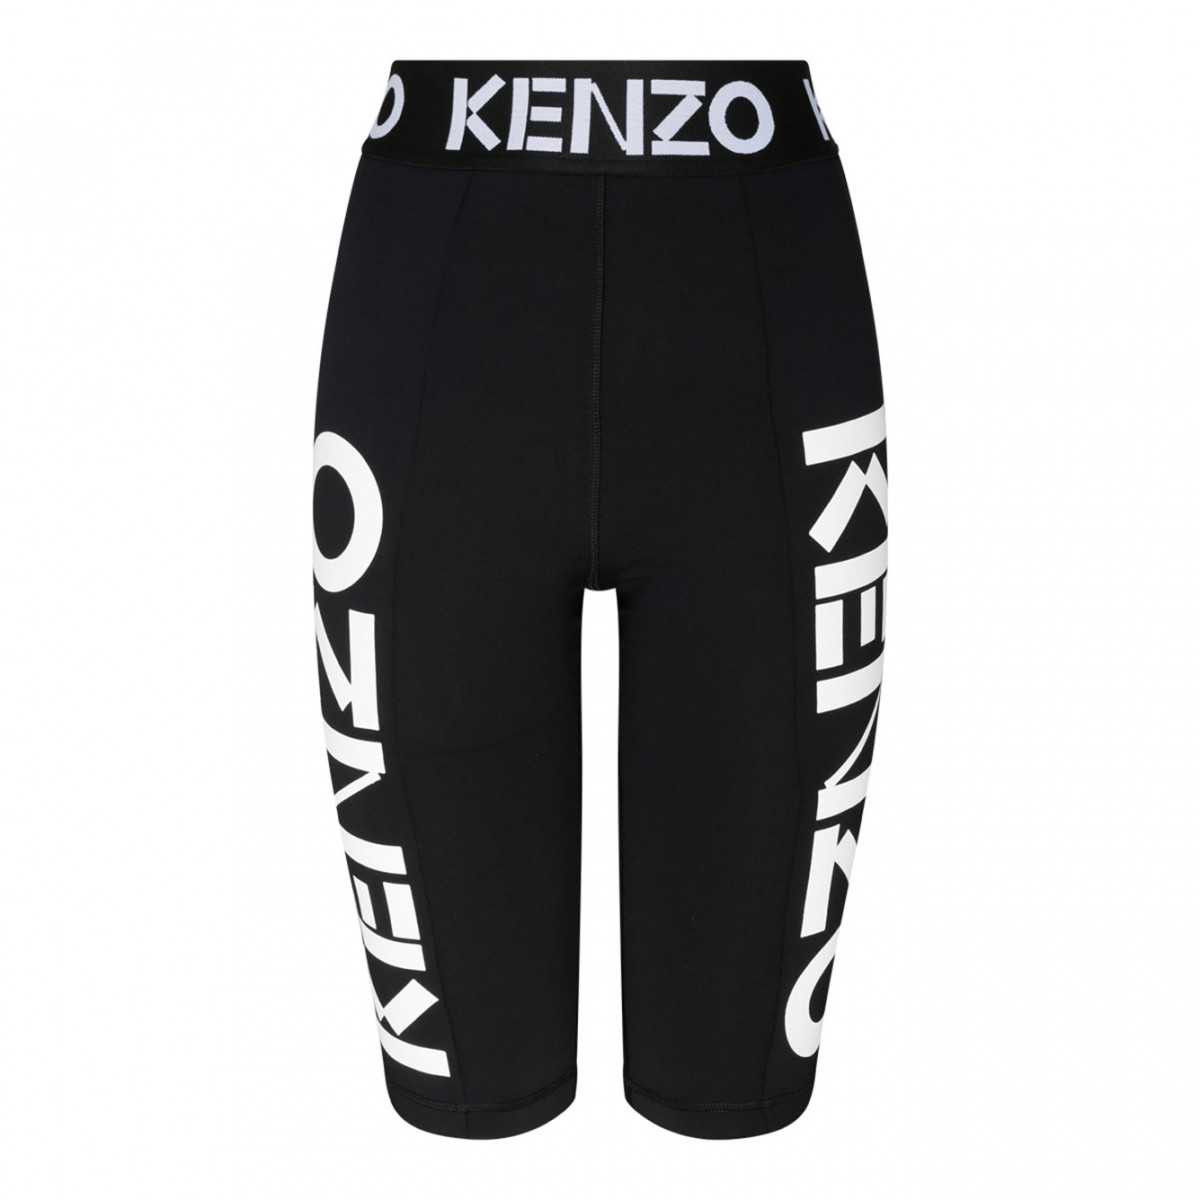 Kenzo Black Logo Print Legging Shorts